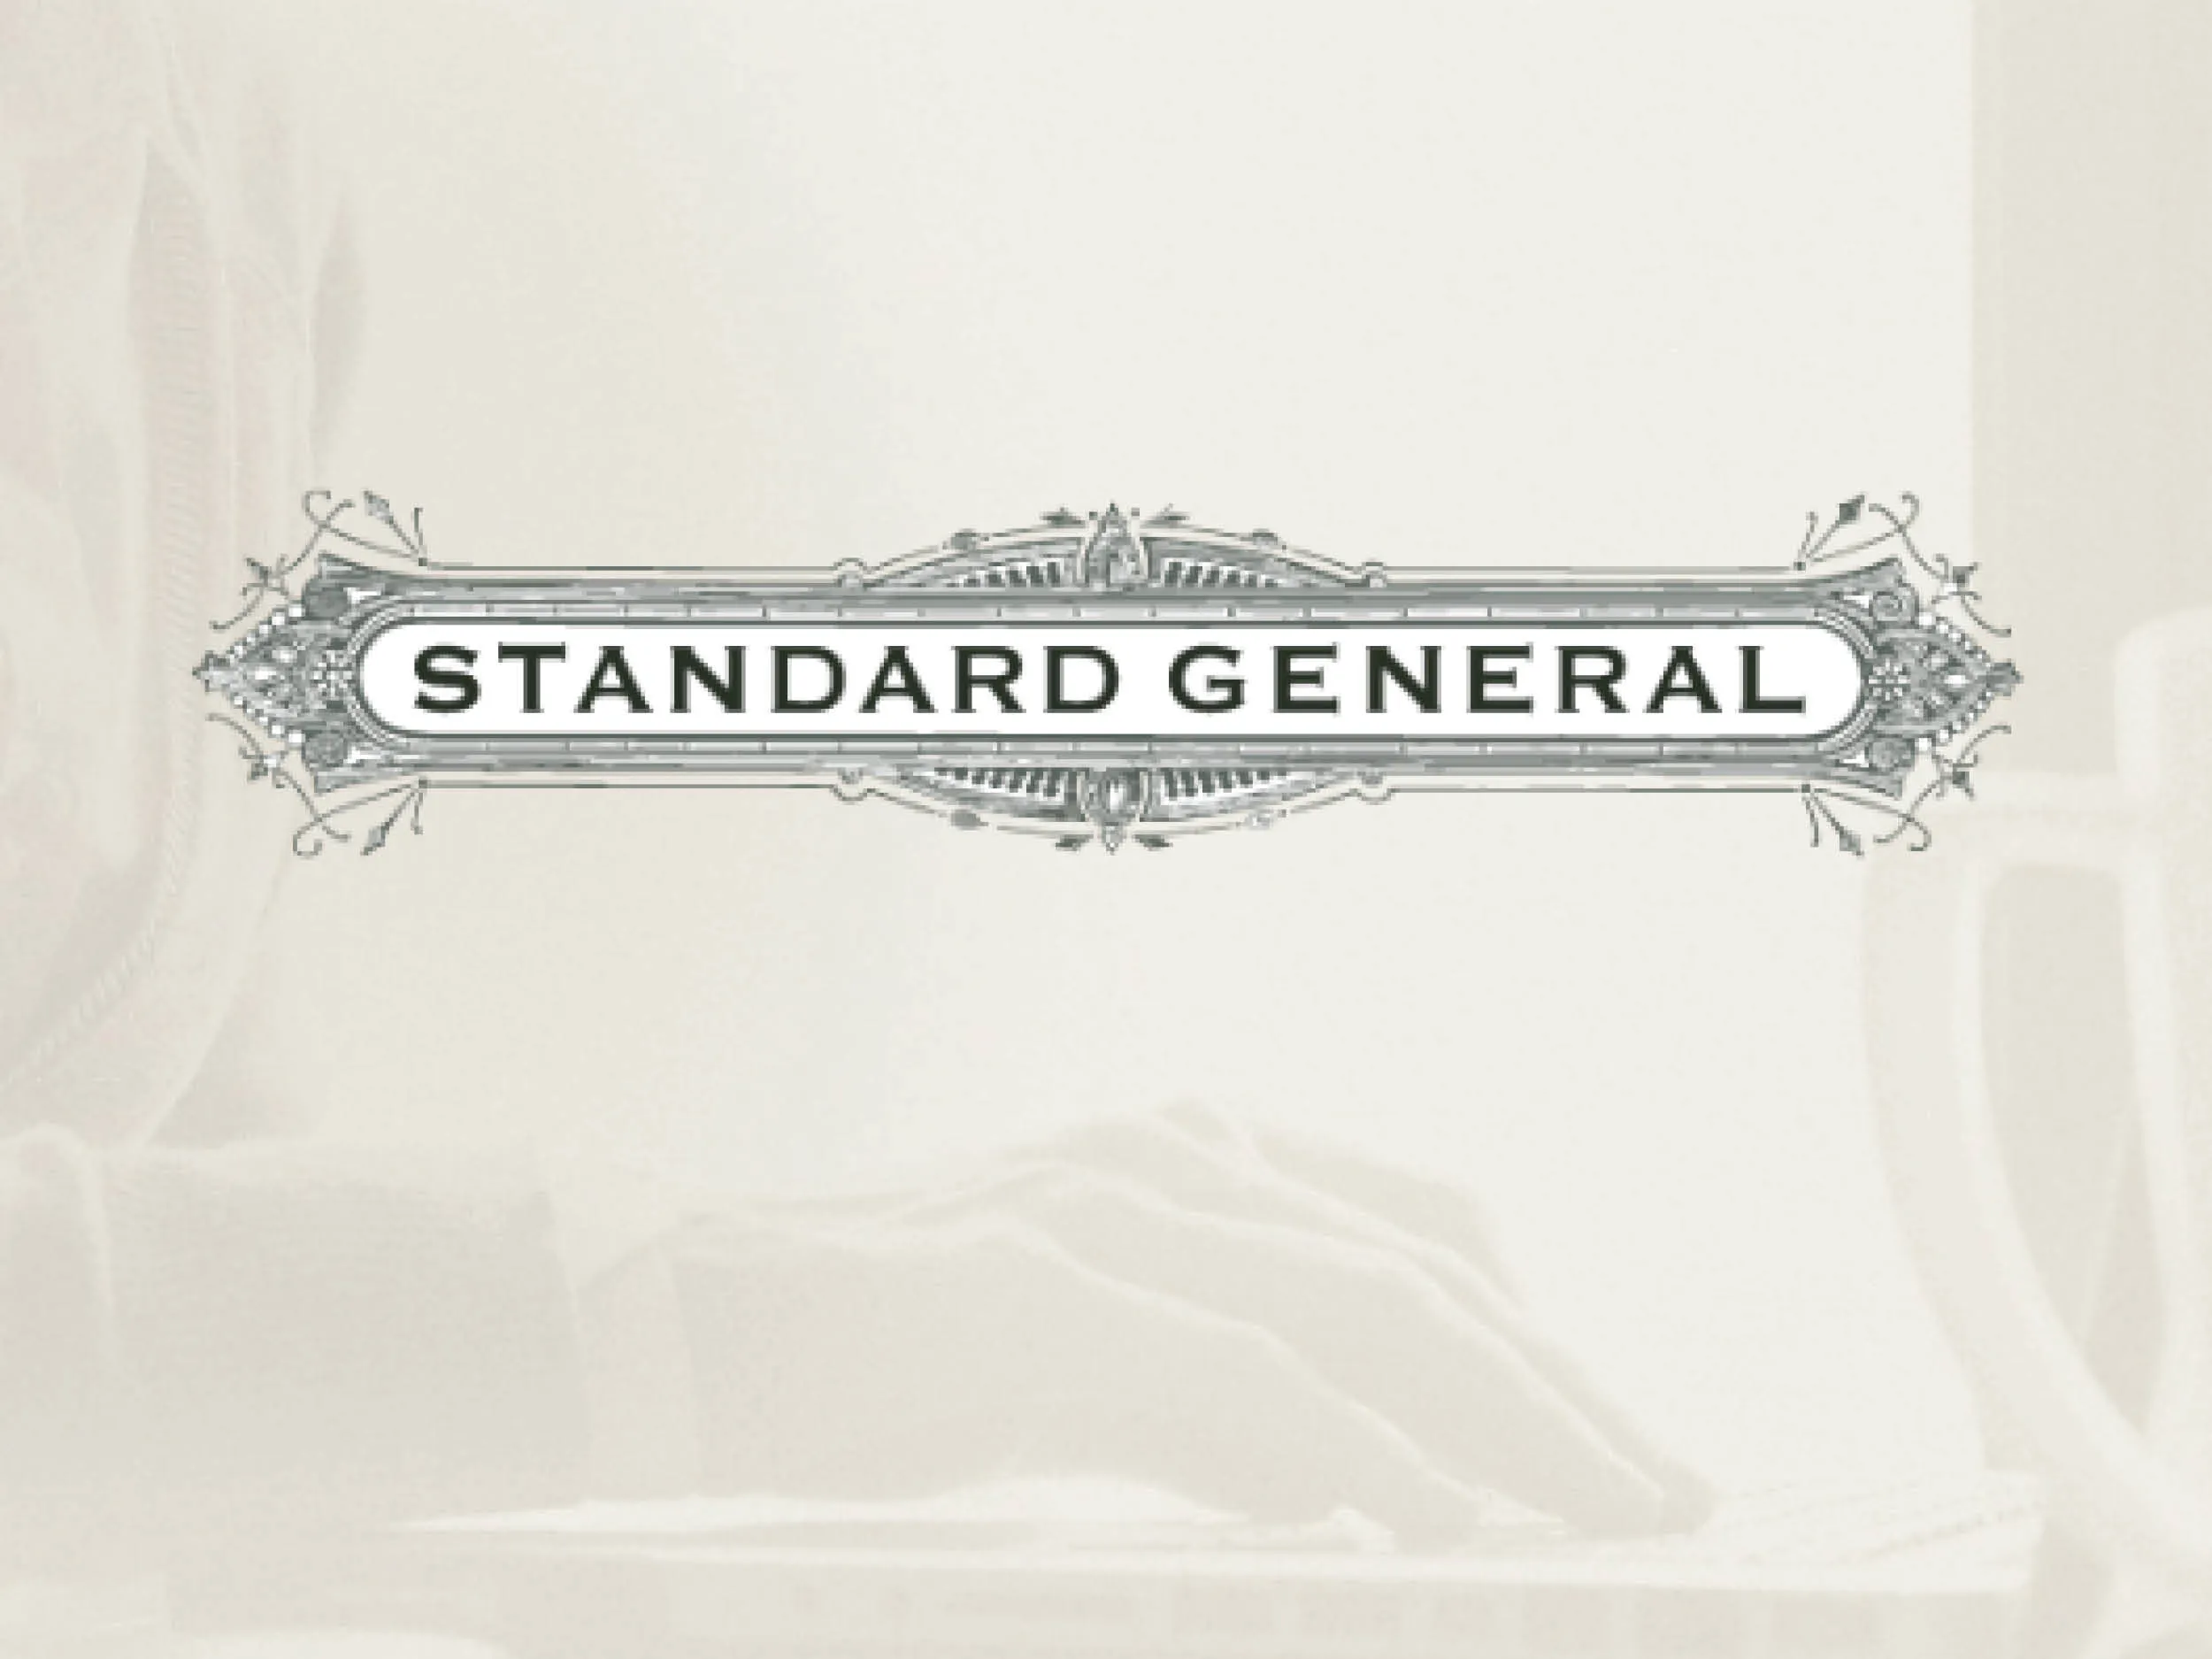 StandardGeneral